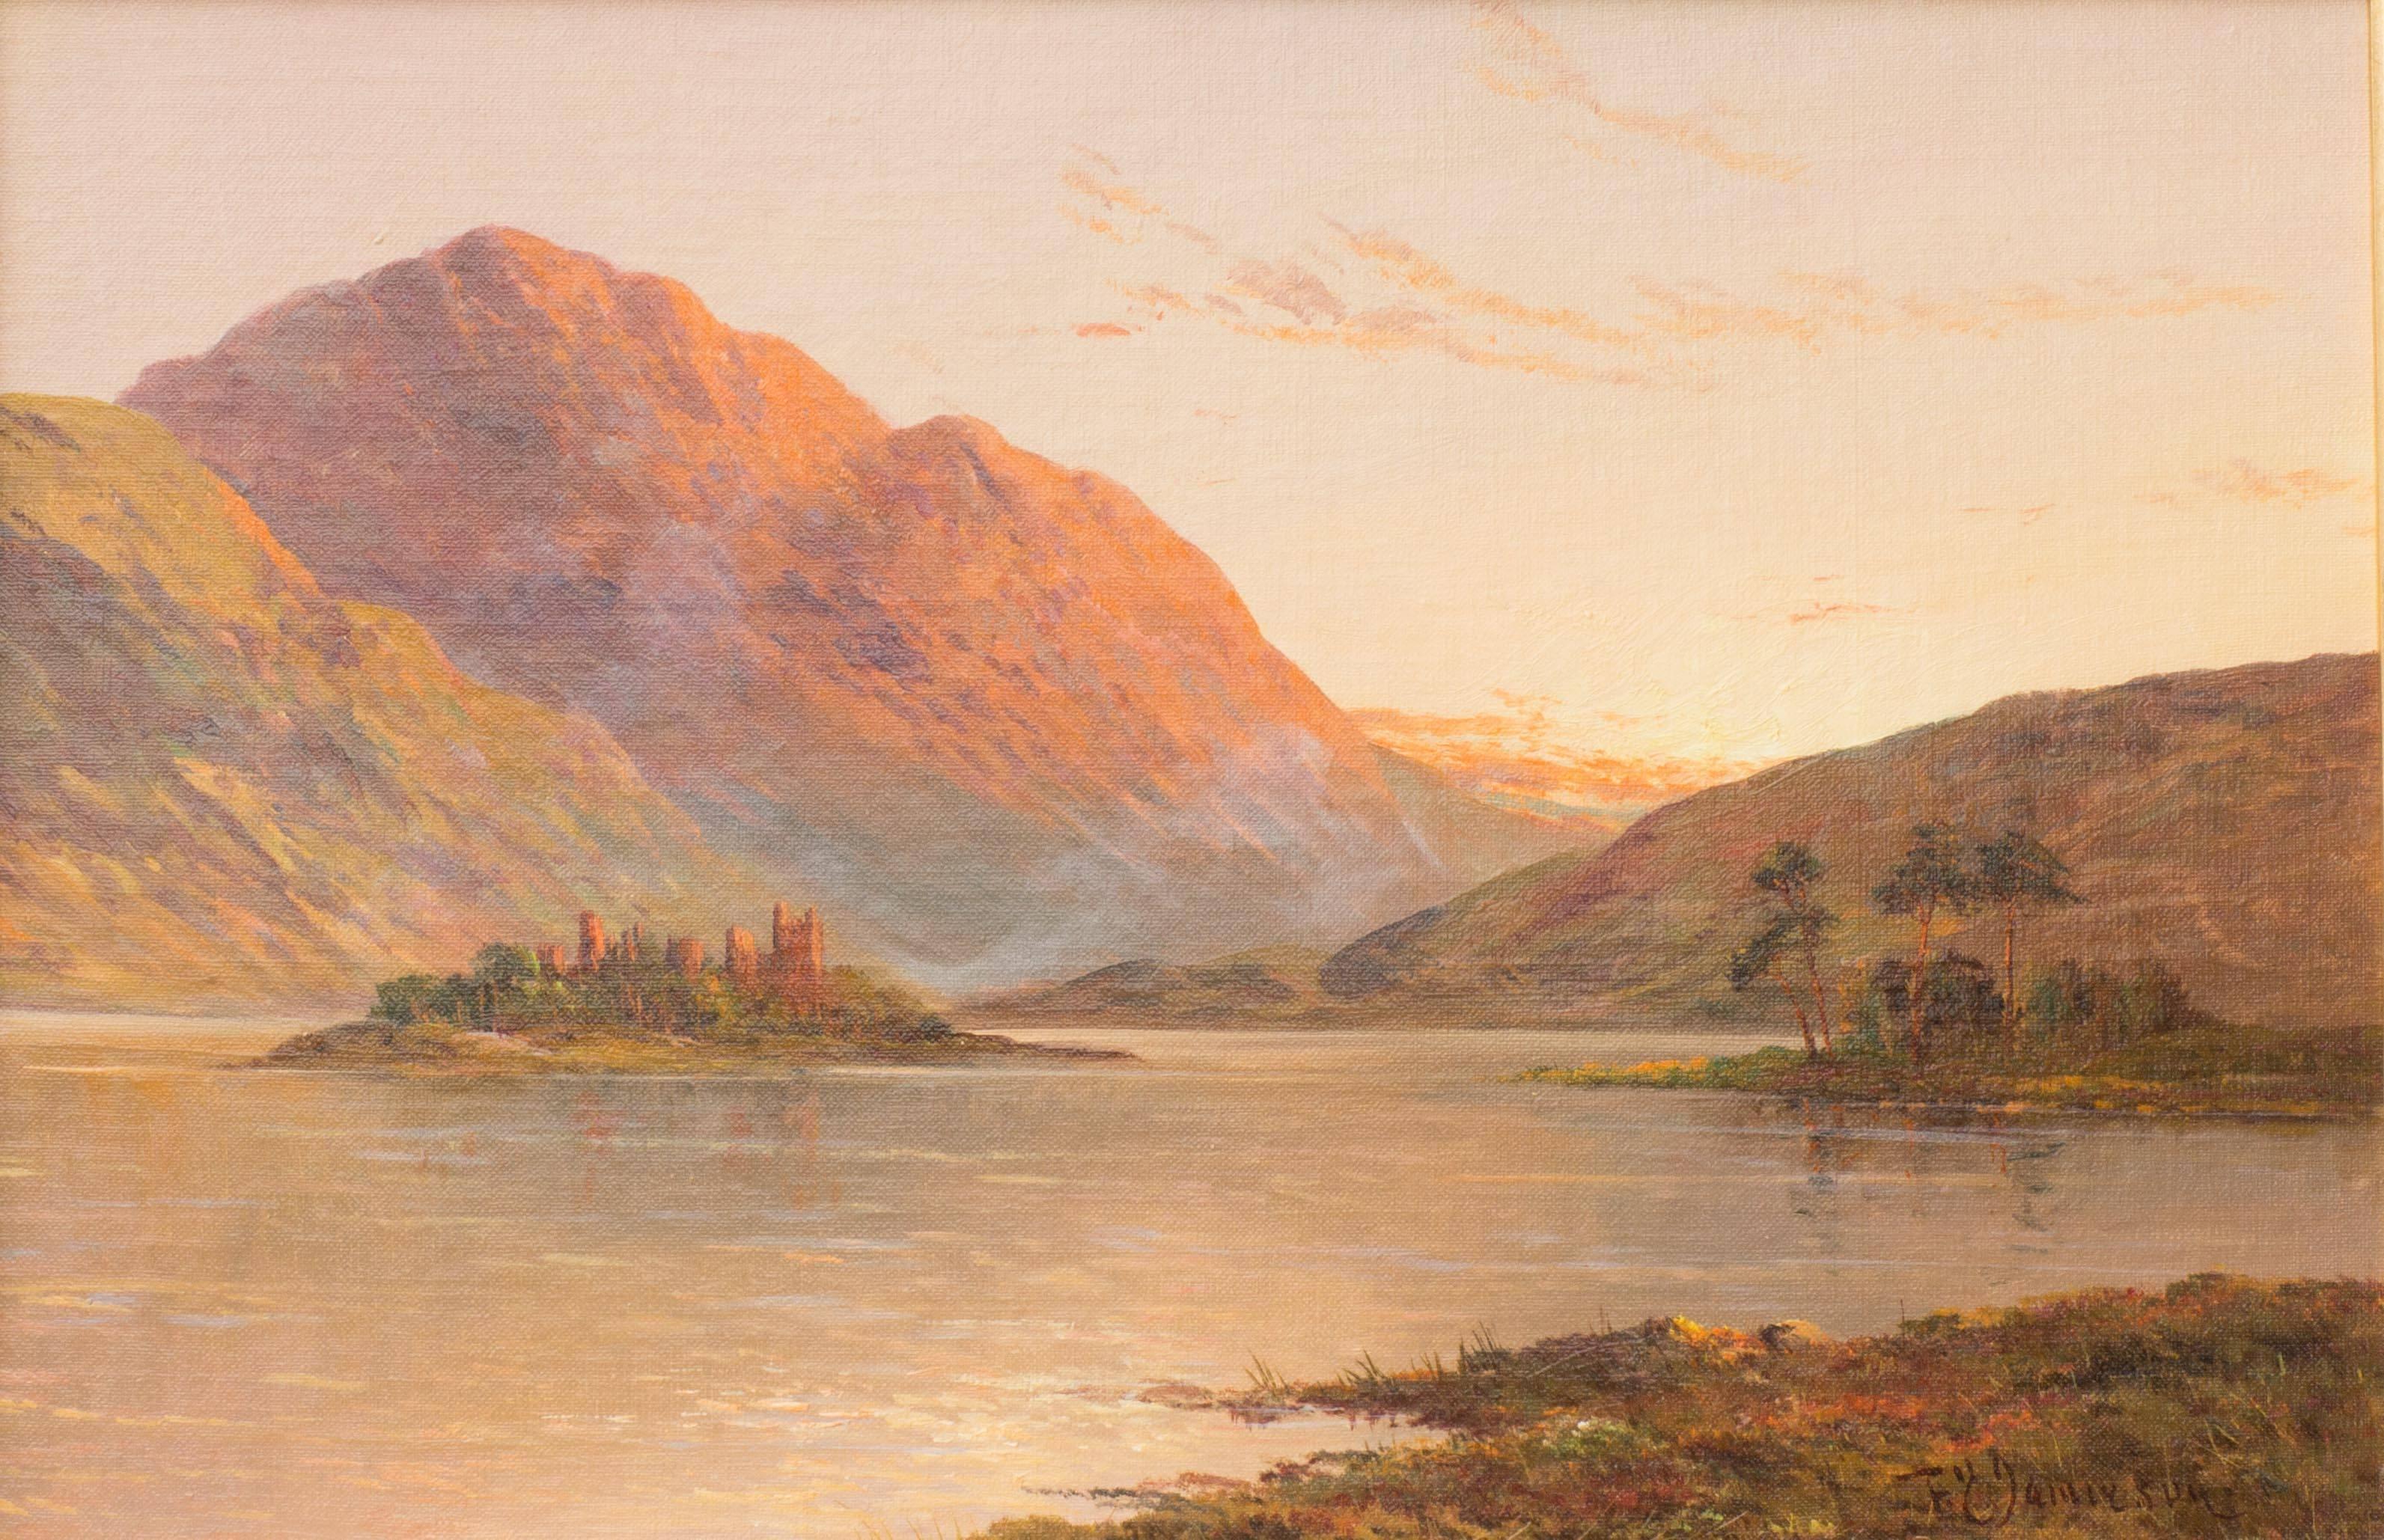 Loch Awe, Scotland - Painting by Francis E. Jamieson